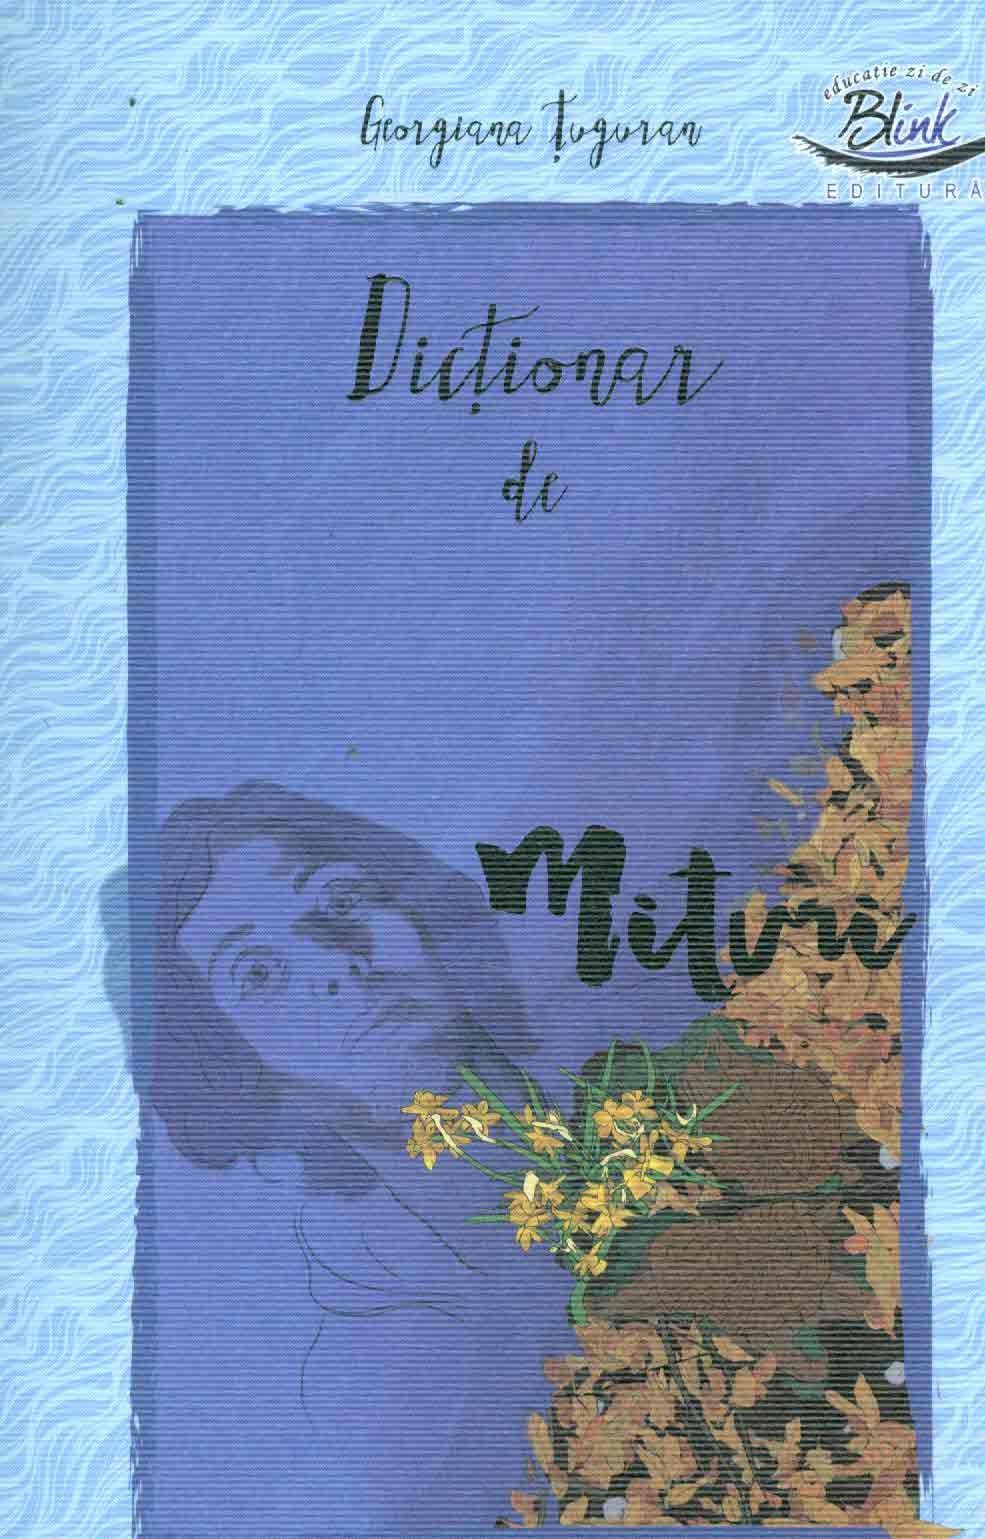 Dictionar de mituri - Georgiana Tuguran